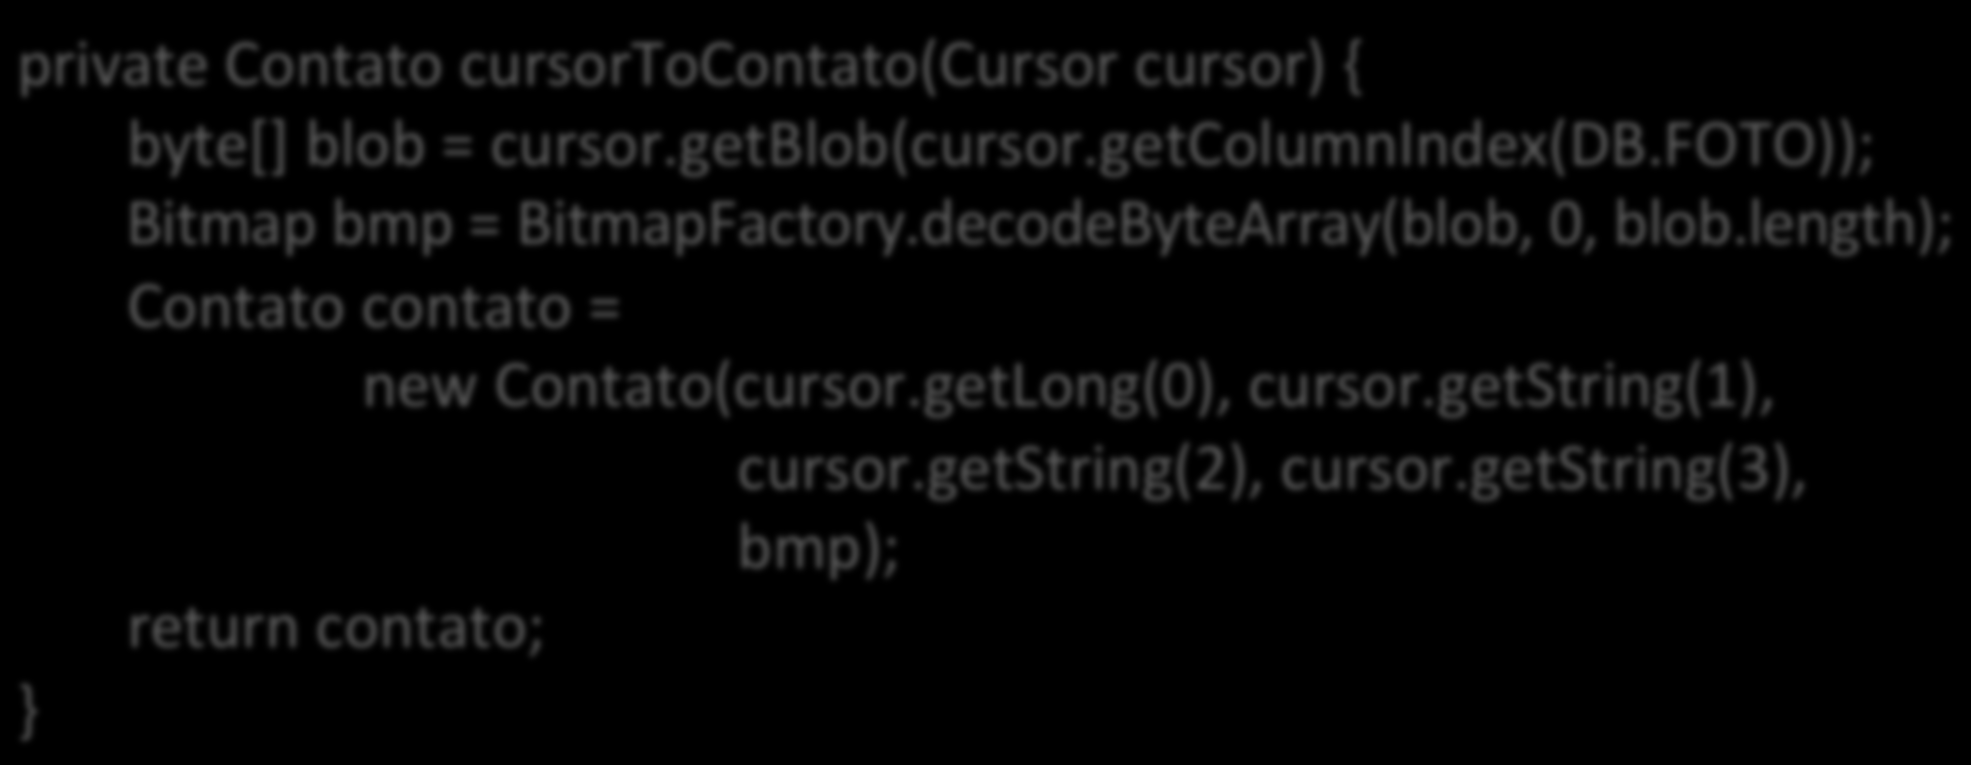 getcolumnindex(db.foto)); Bitmap bmp = BitmapFactory.decodeByteArray(blob, 0, blob.